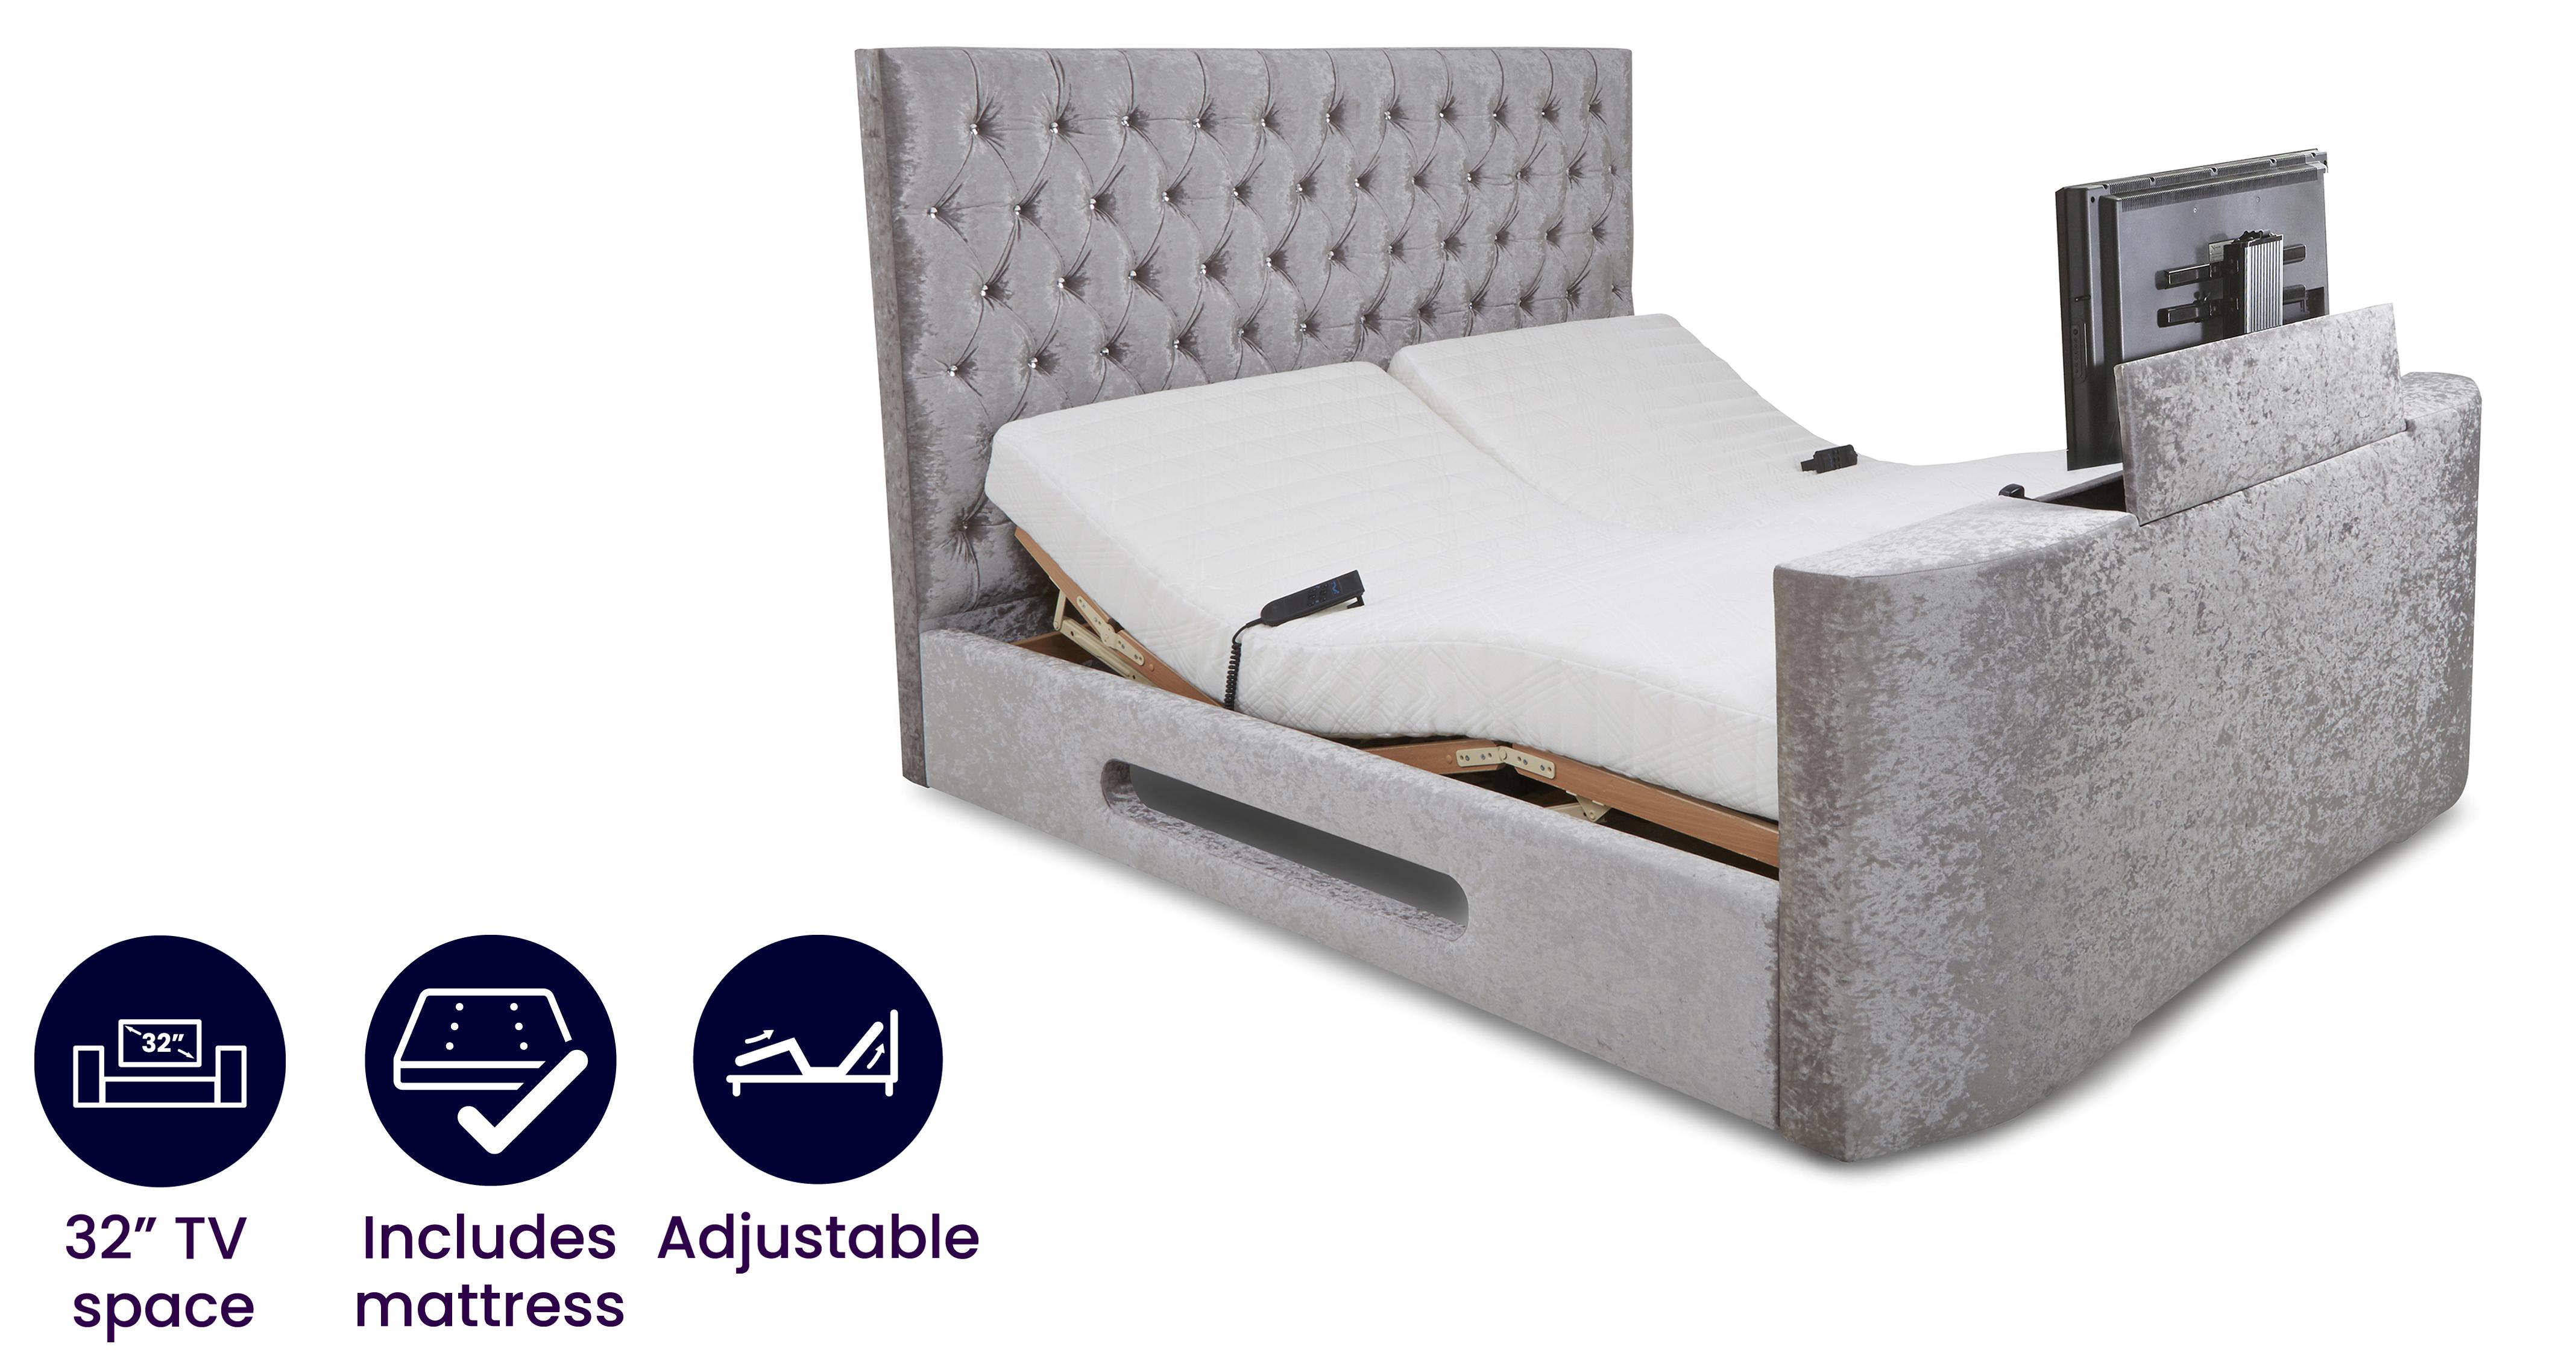 Impulse King Adjustable Tv Bed, King Size Bed Frame With Tv Lift